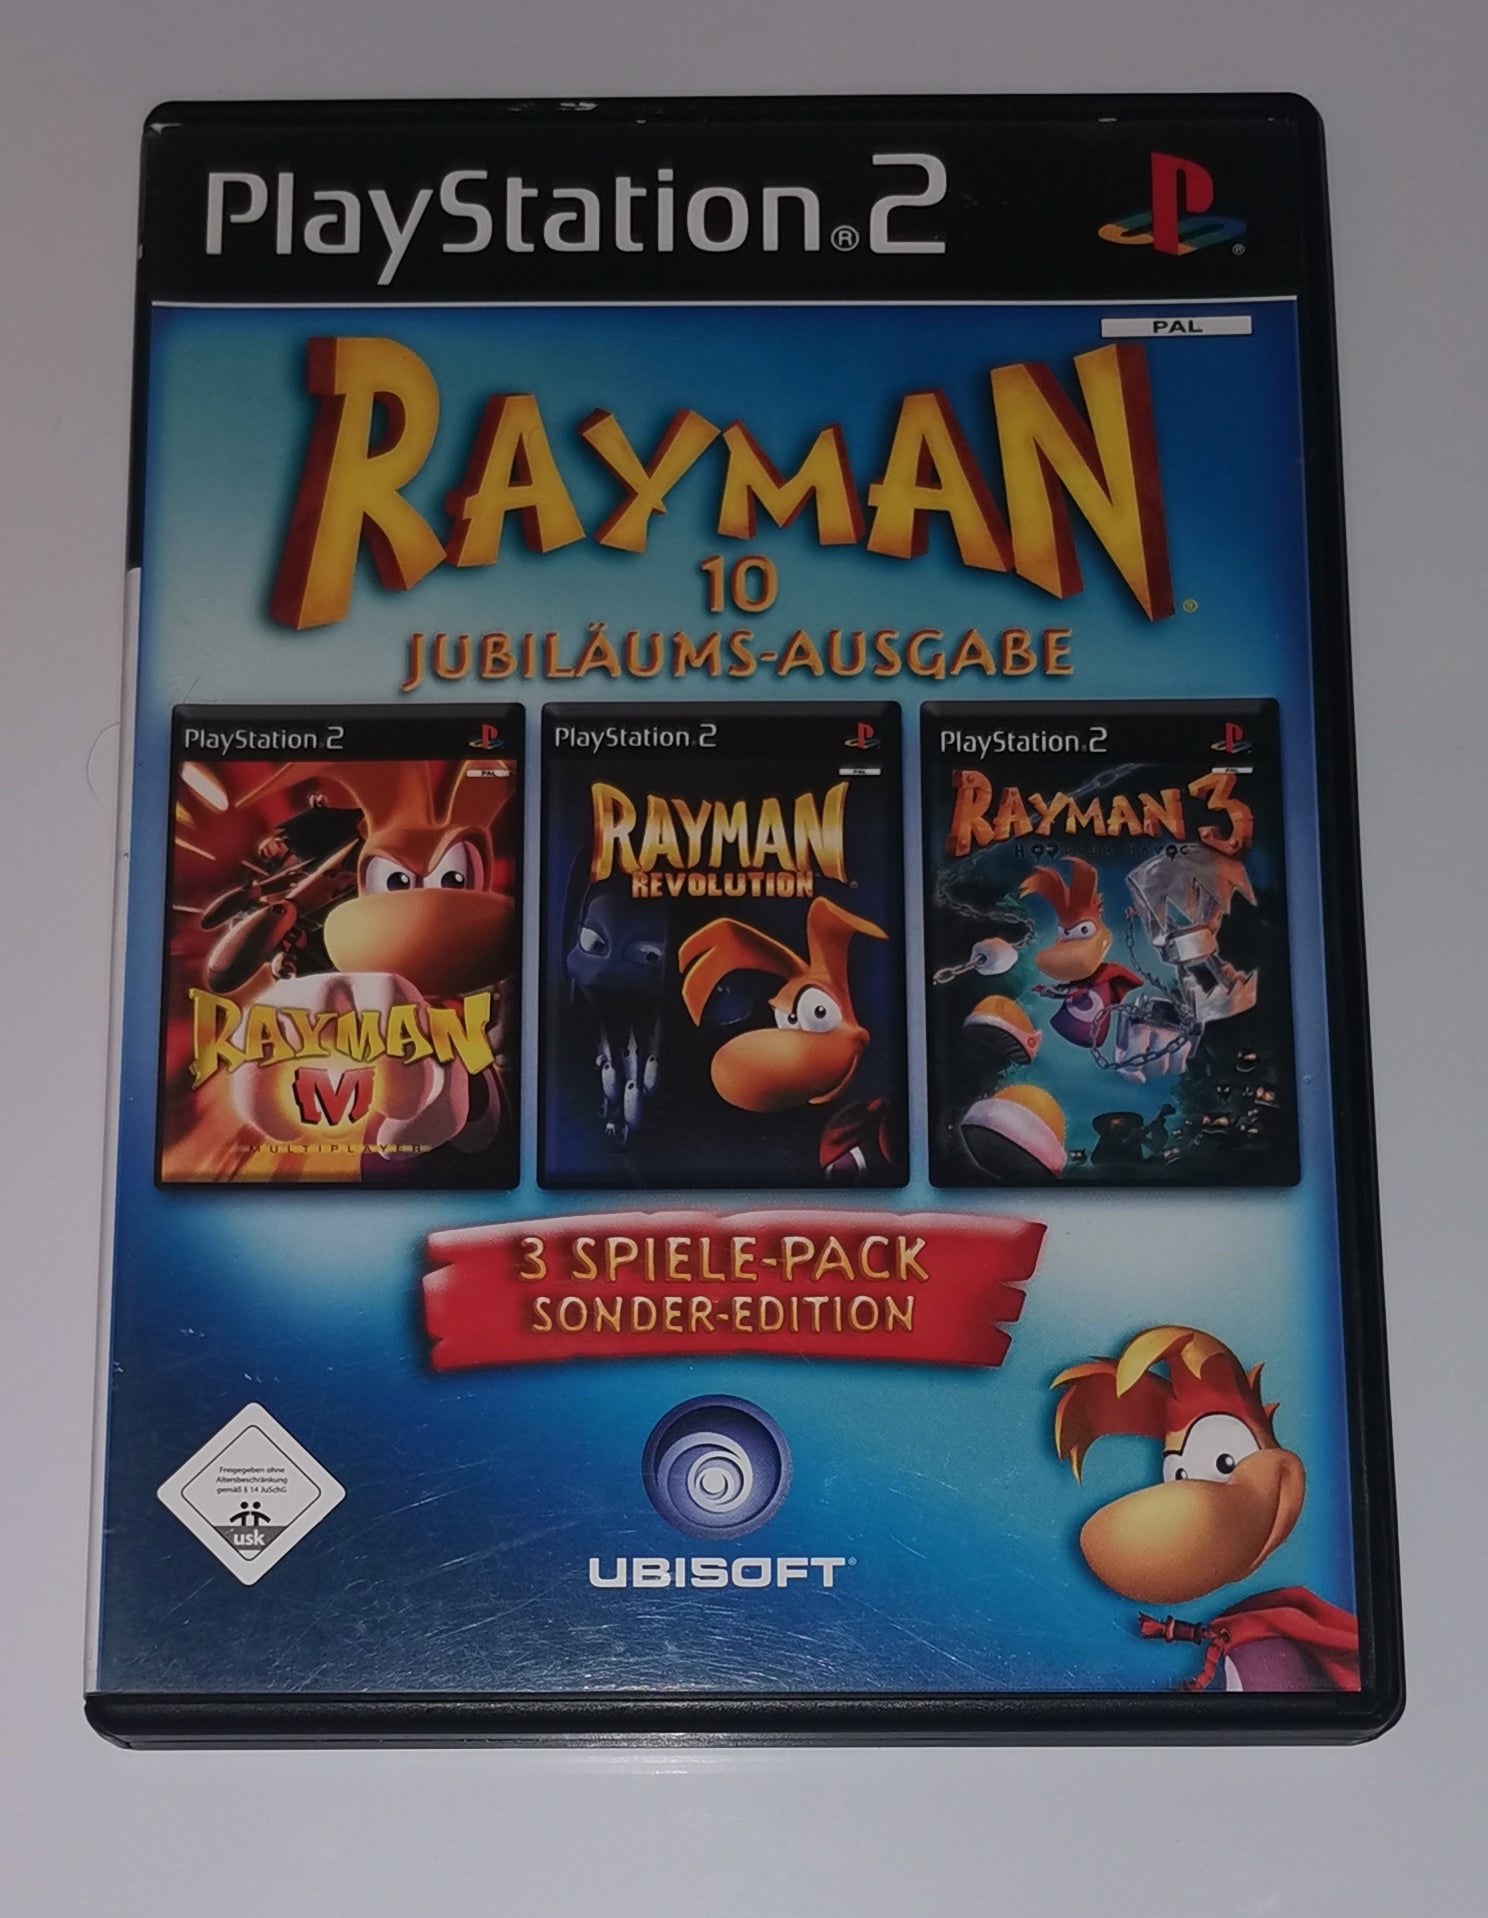 Rayman JubilaeumsAusgabe 10 (Playstation 2) [Akzeptabel]